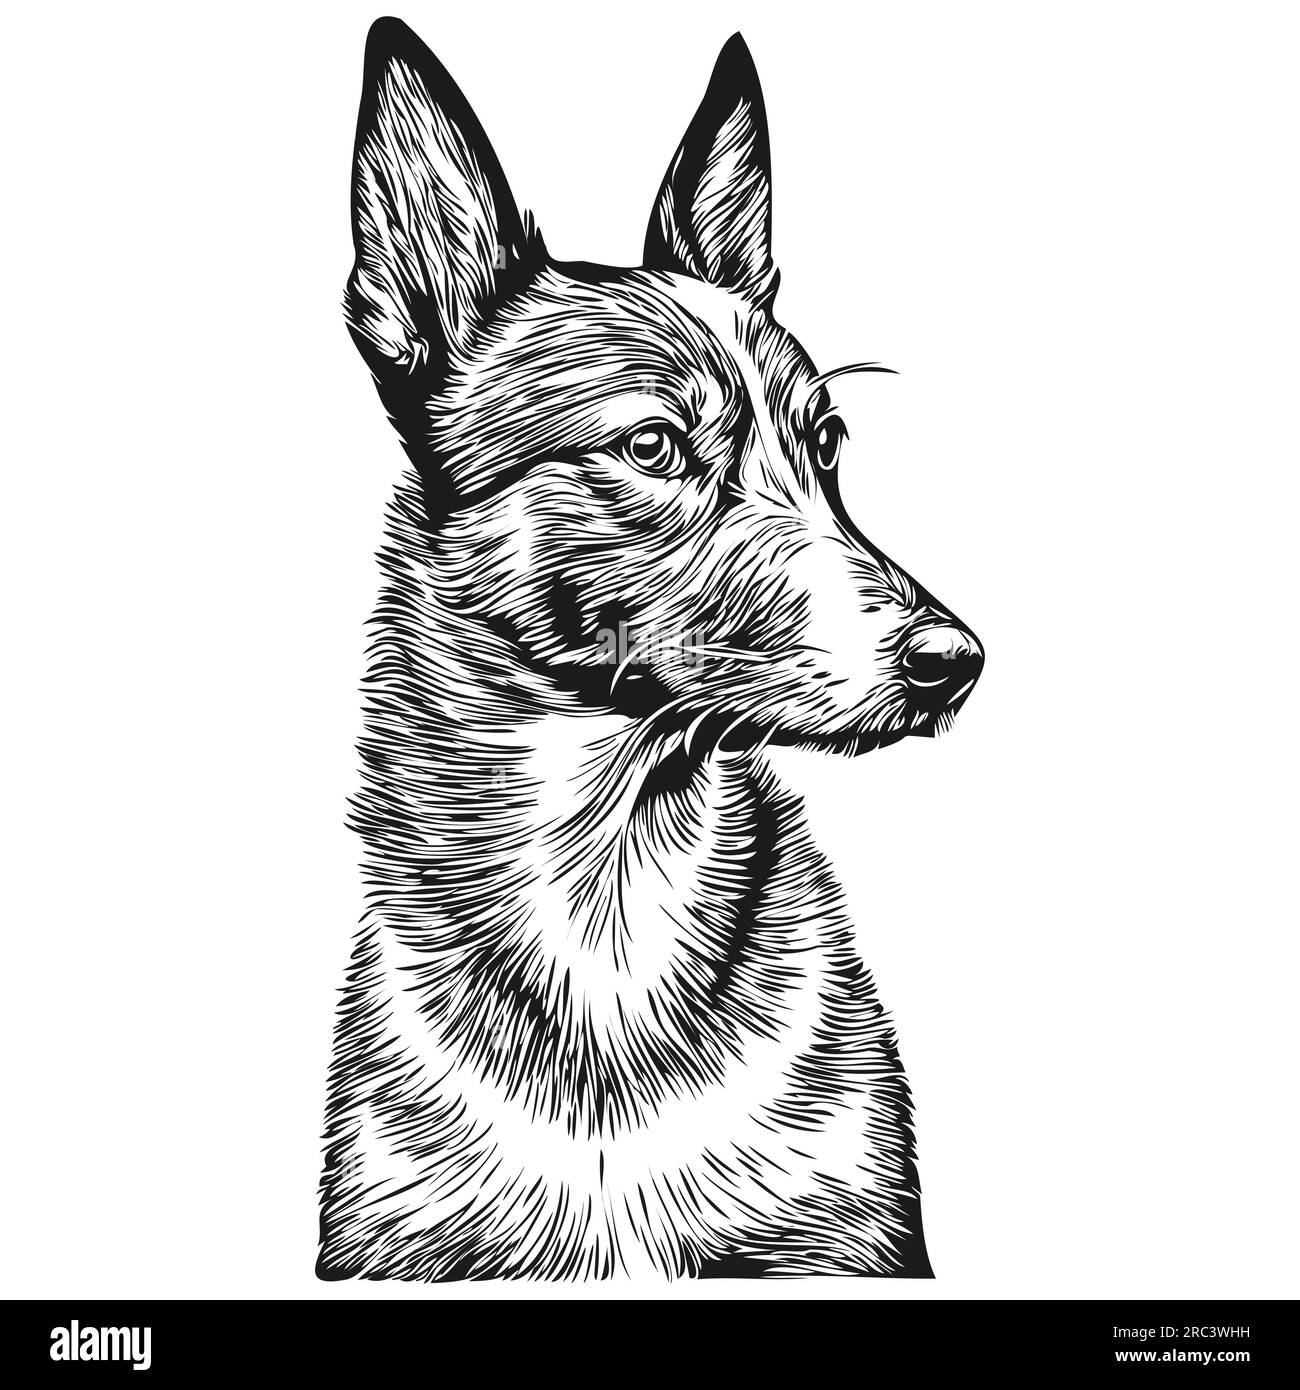 Basenji dog realistic pet illustration, hand drawing face black and ...